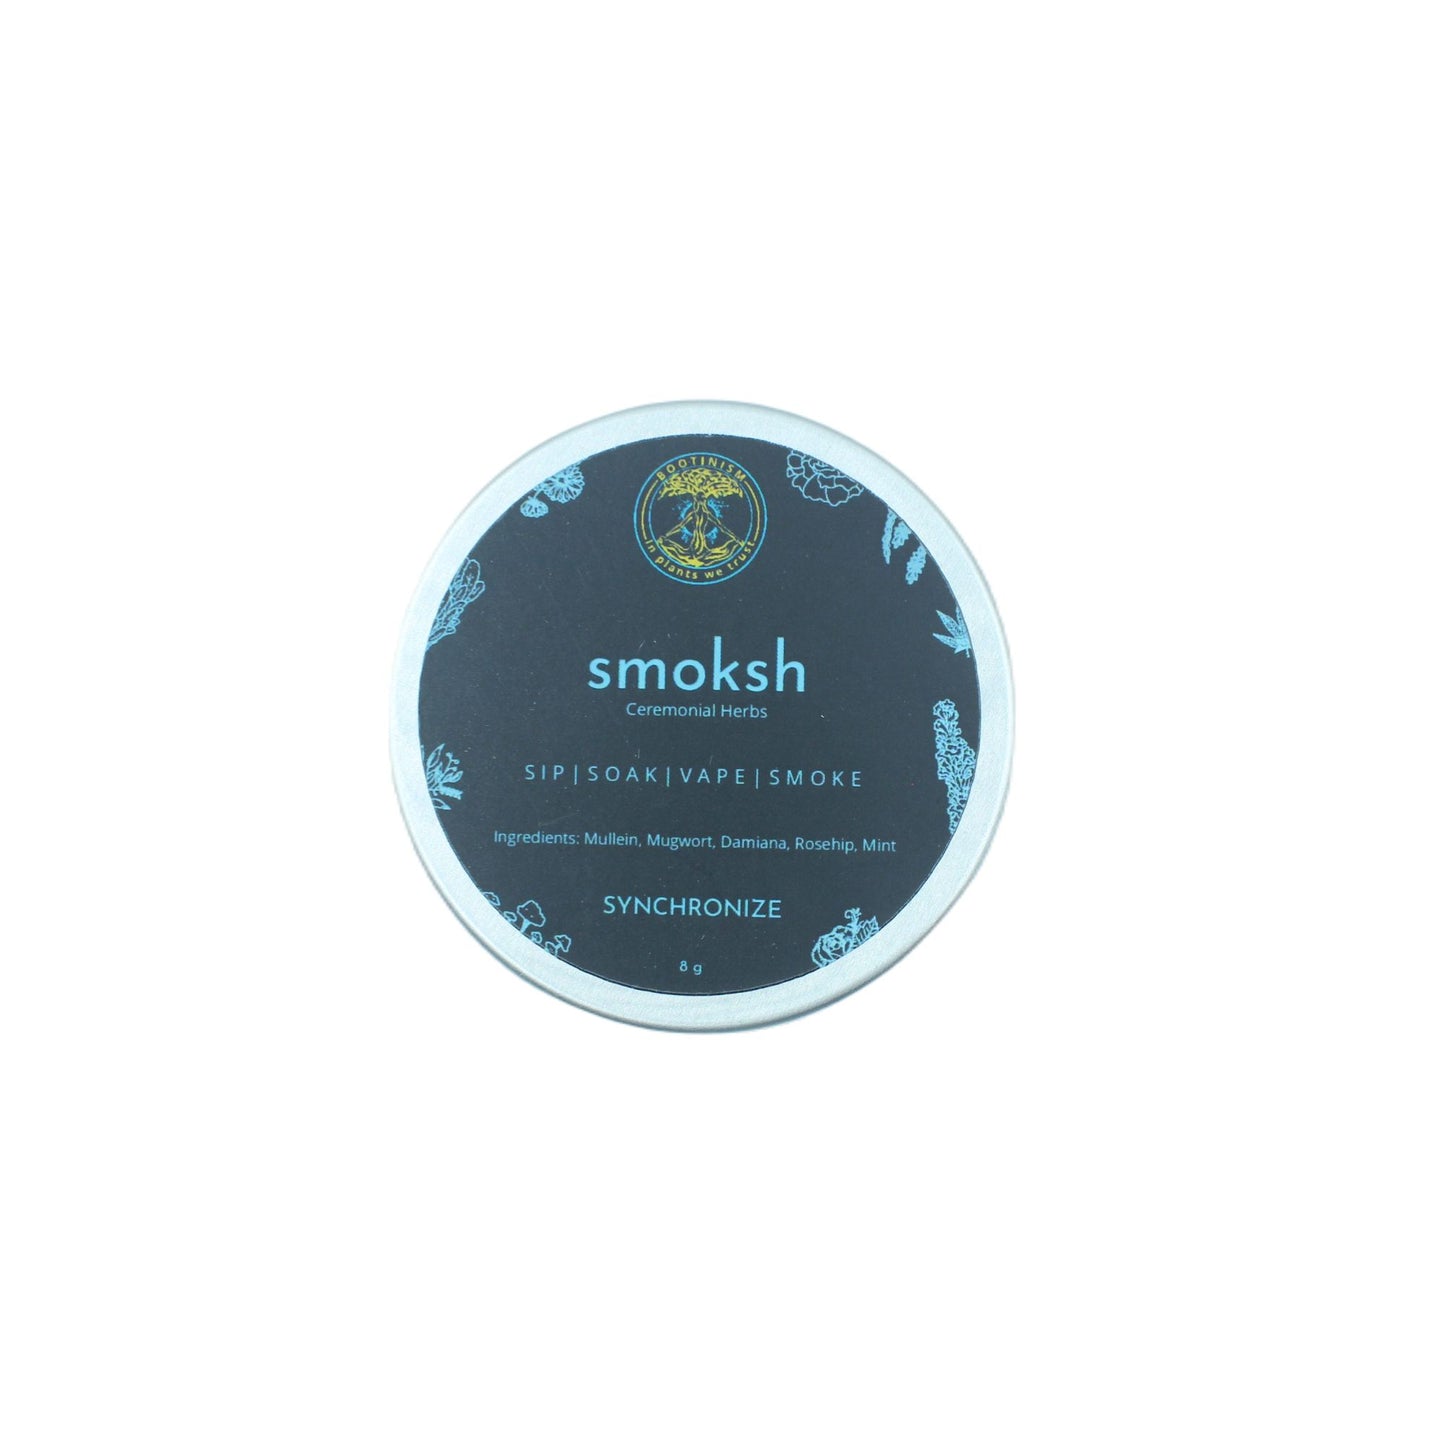 SMOKSH SYNCHRONIZE Herbal Smoking Blend 8g  HighJack India